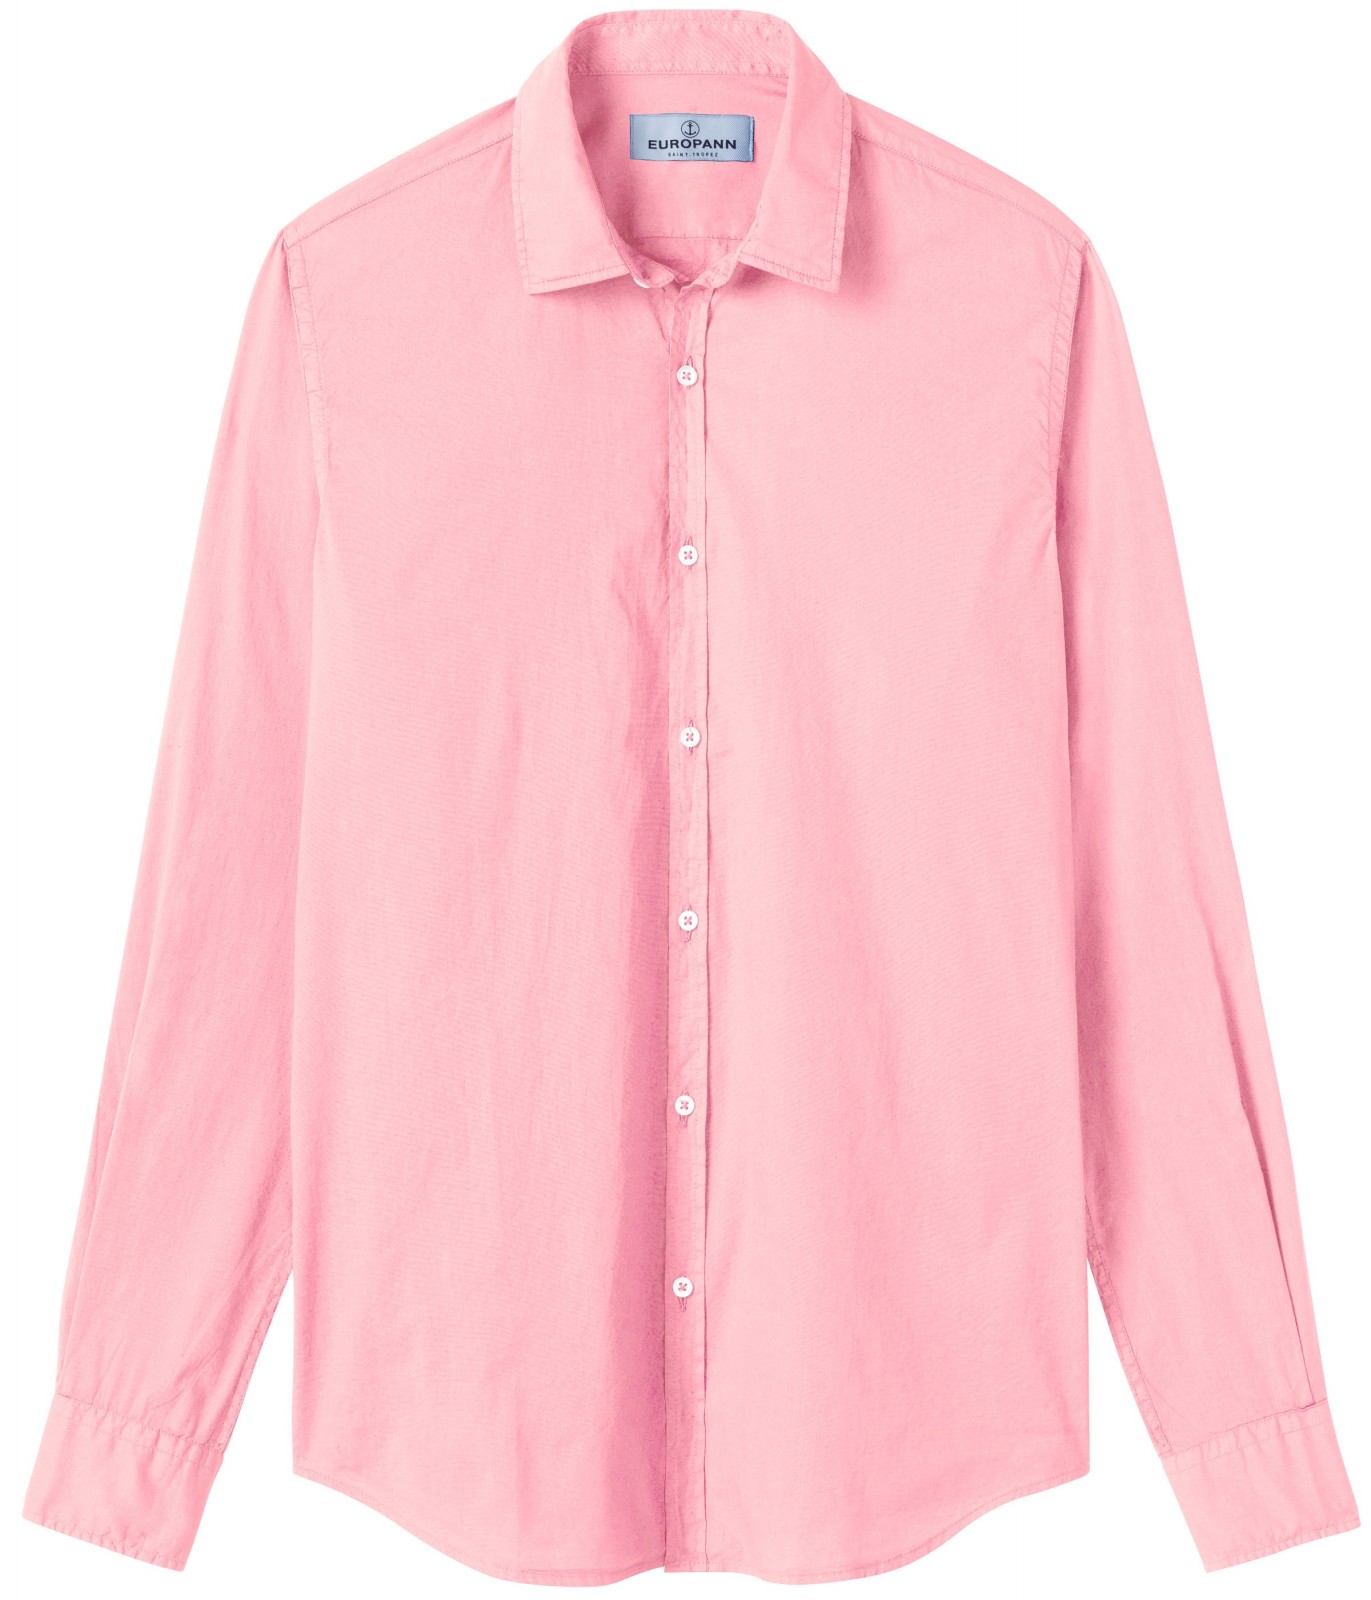 Plain pink color long sleeves shirt for men | Quality brand Europann